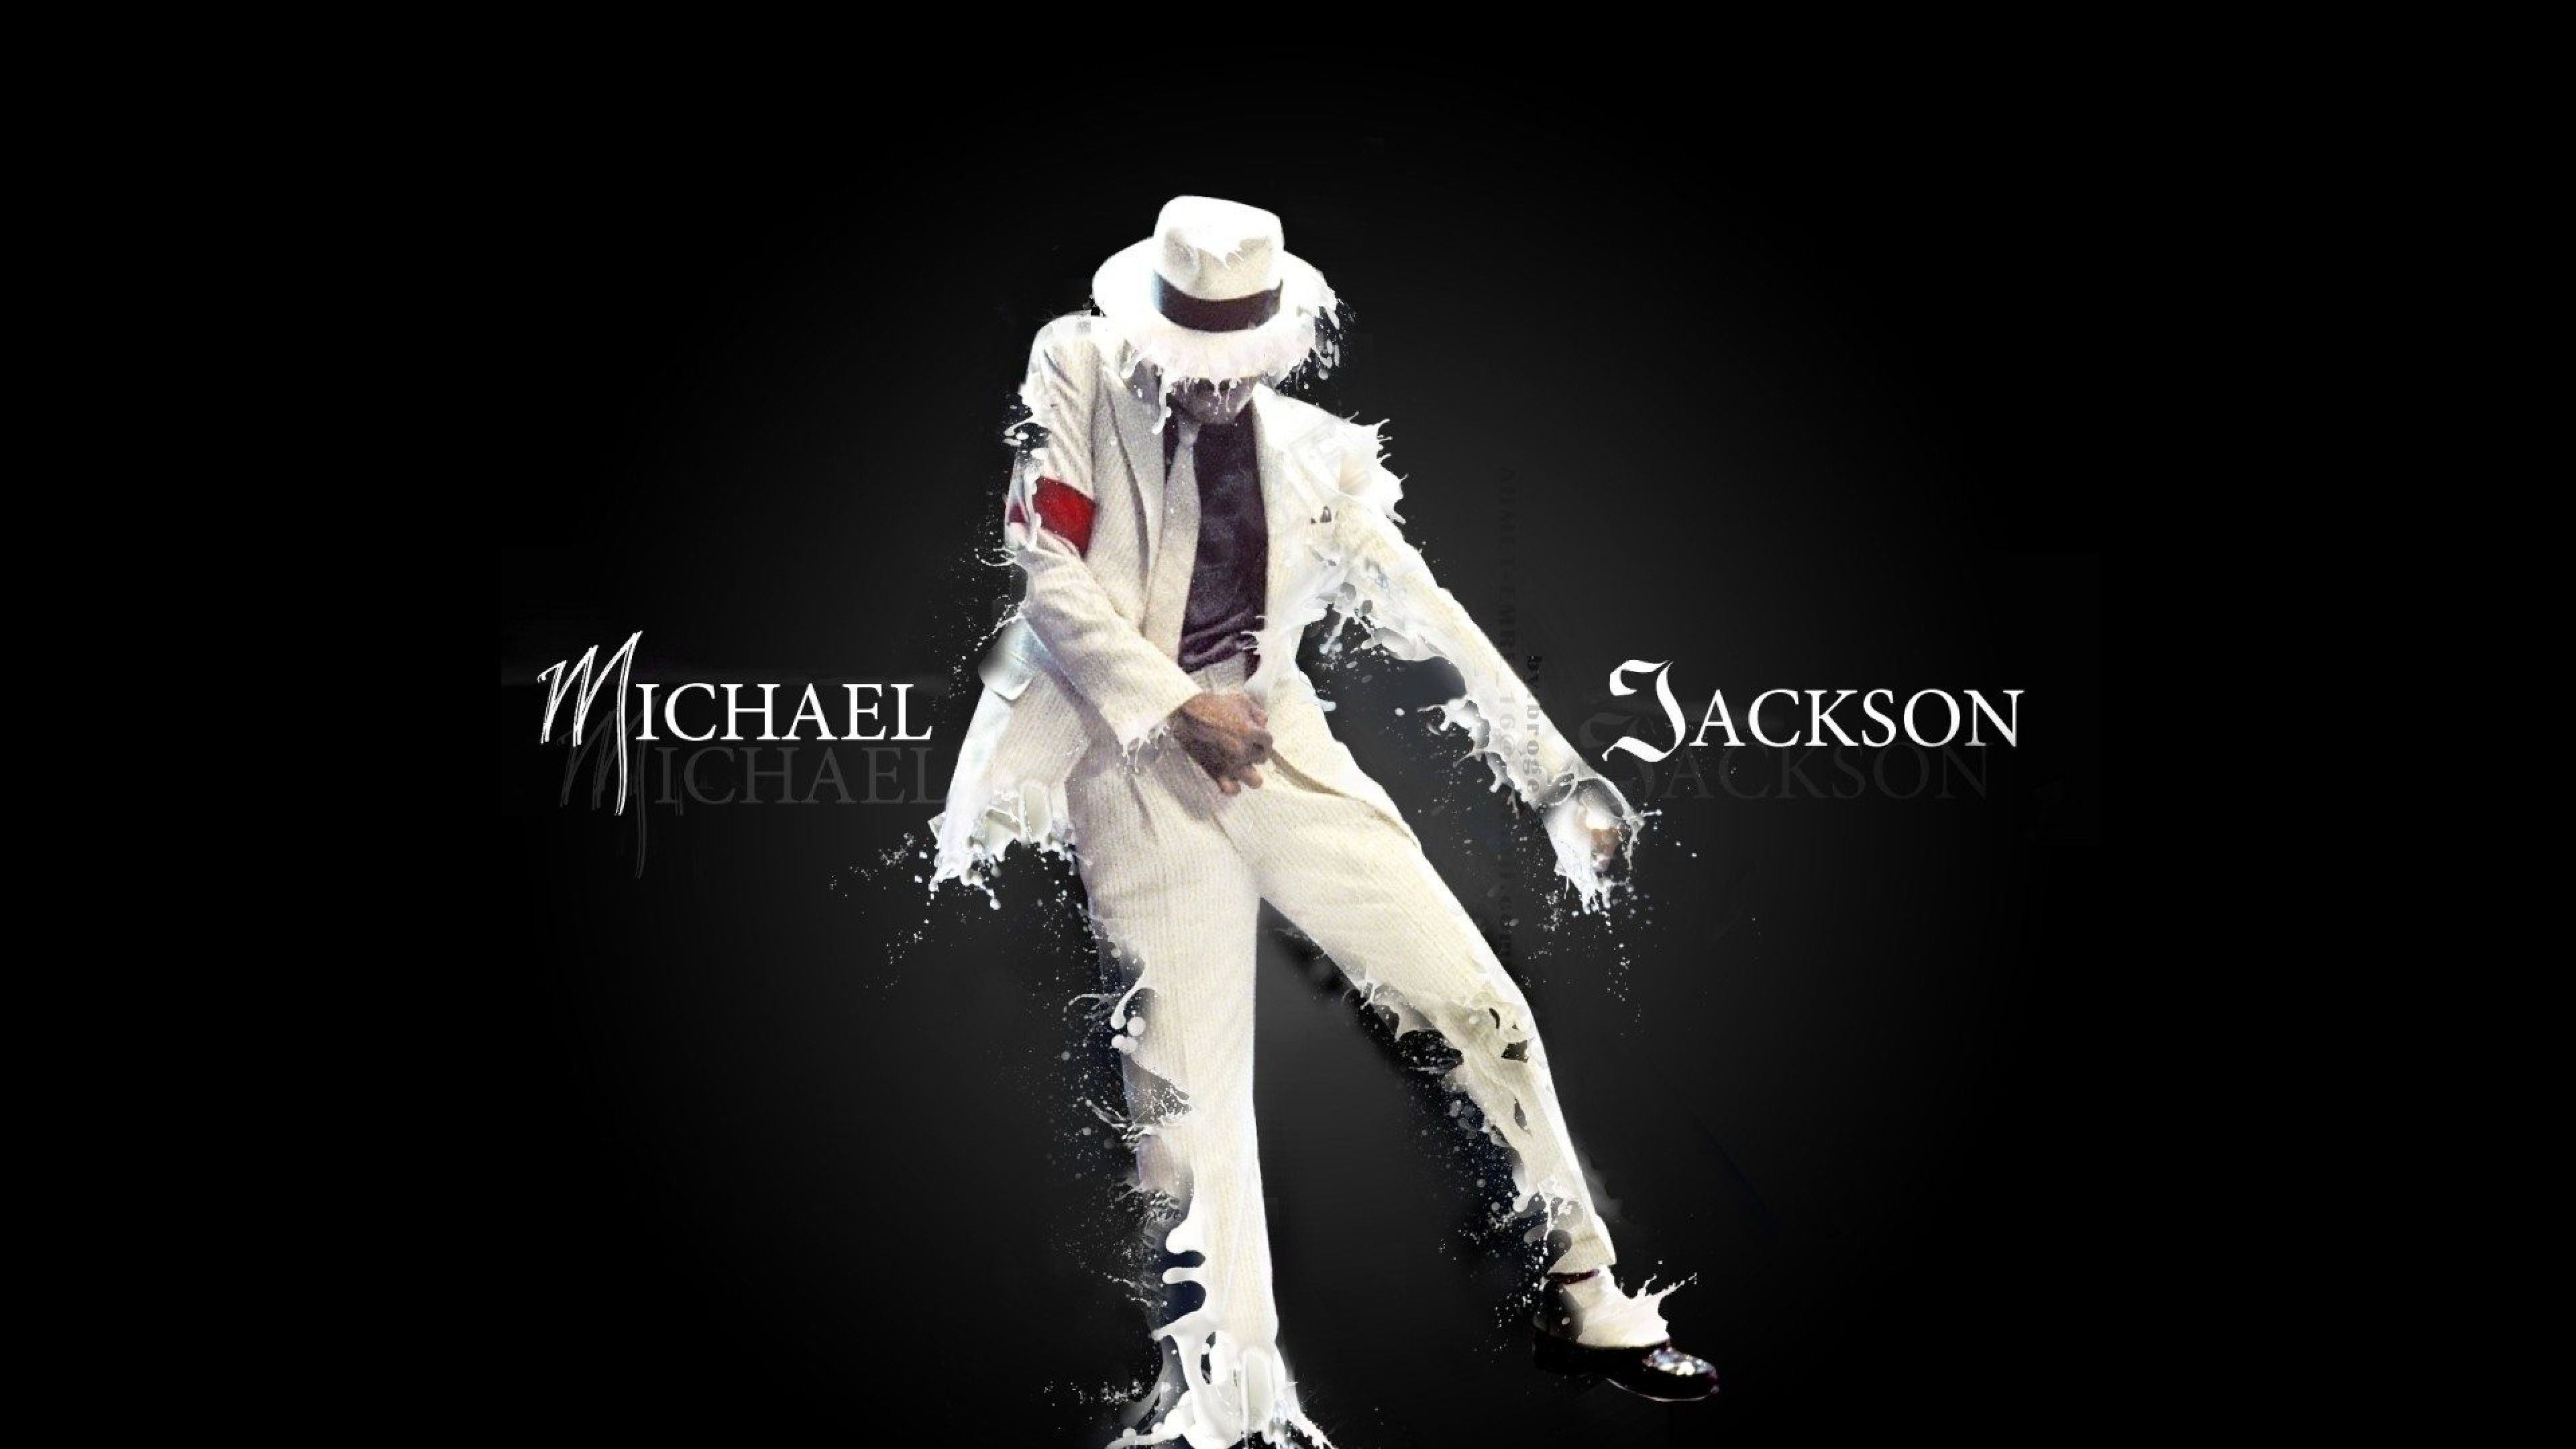 Michael Jackson Background. Jackson Dangerous Wallpaper, Micheal Jackson Celebrity Wallpaper and Percy Jackson Wallpaper